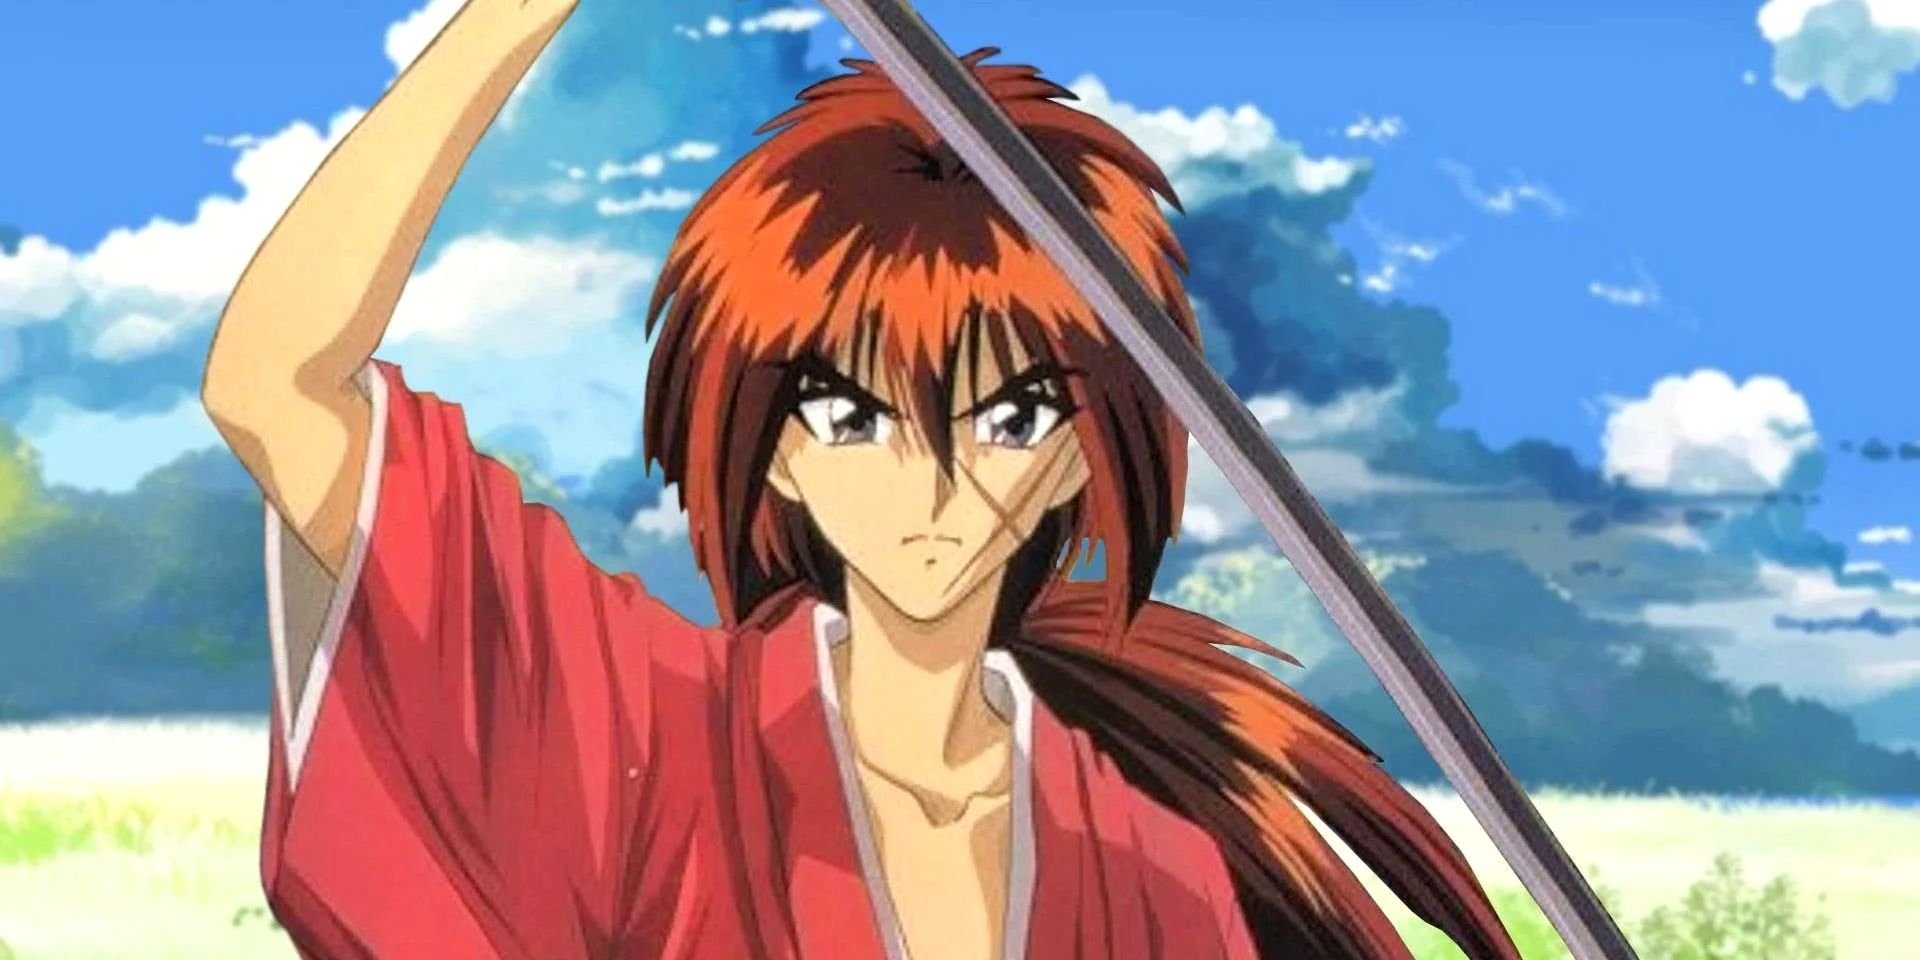 red haired ronin kenshin draws his katana